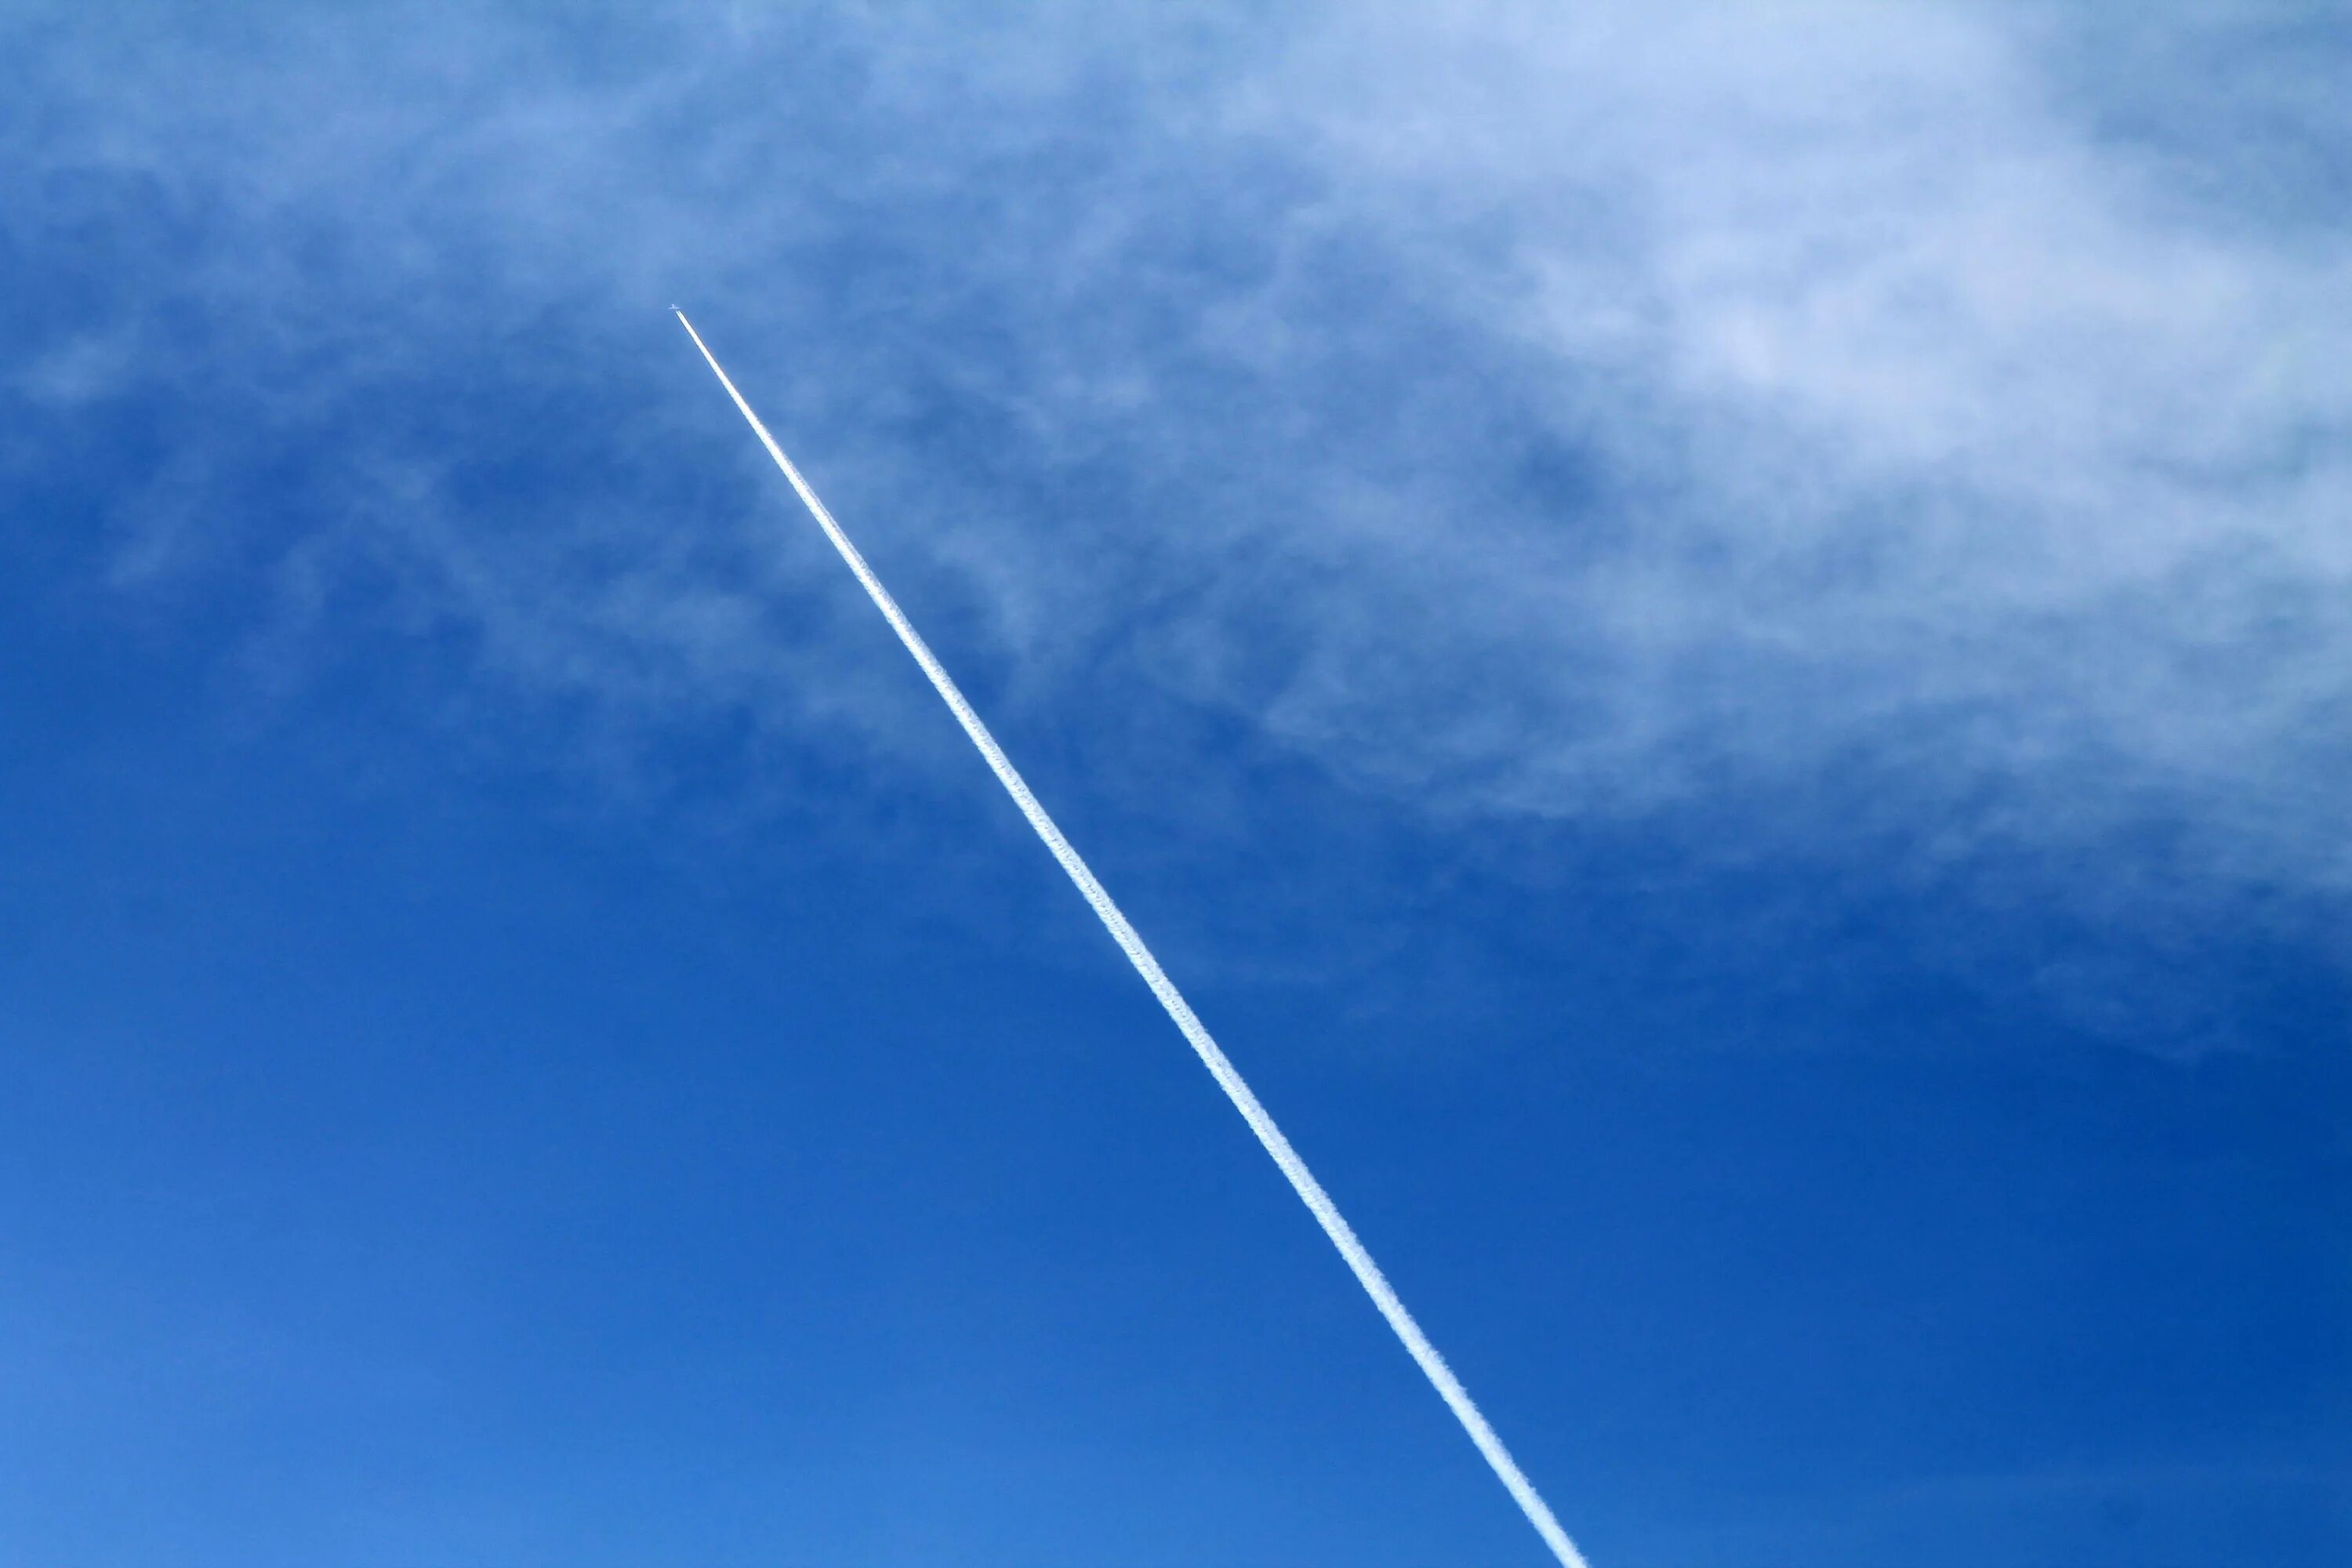 Cfvjktn DF yt,t. Самолет в небе. След самолета в небе. Полосы от самолета на небе. За пролетающим самолетом видна темная полоса